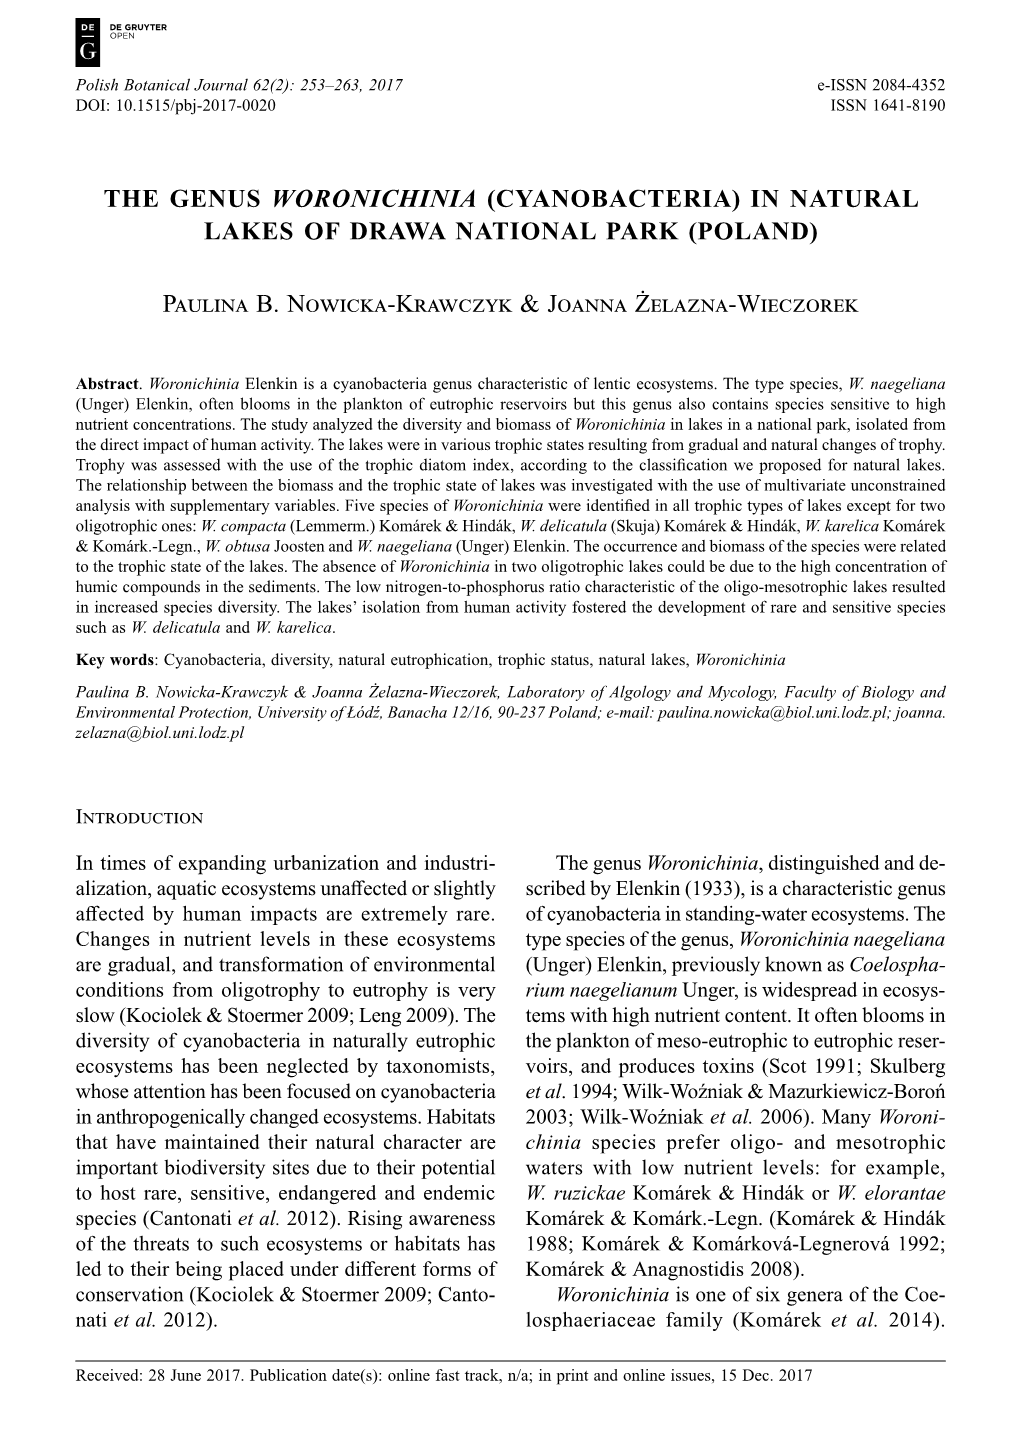 The Genus Woronichinia (Cyanobacteria) in Natural Lakes of Drawa National Park (Poland)